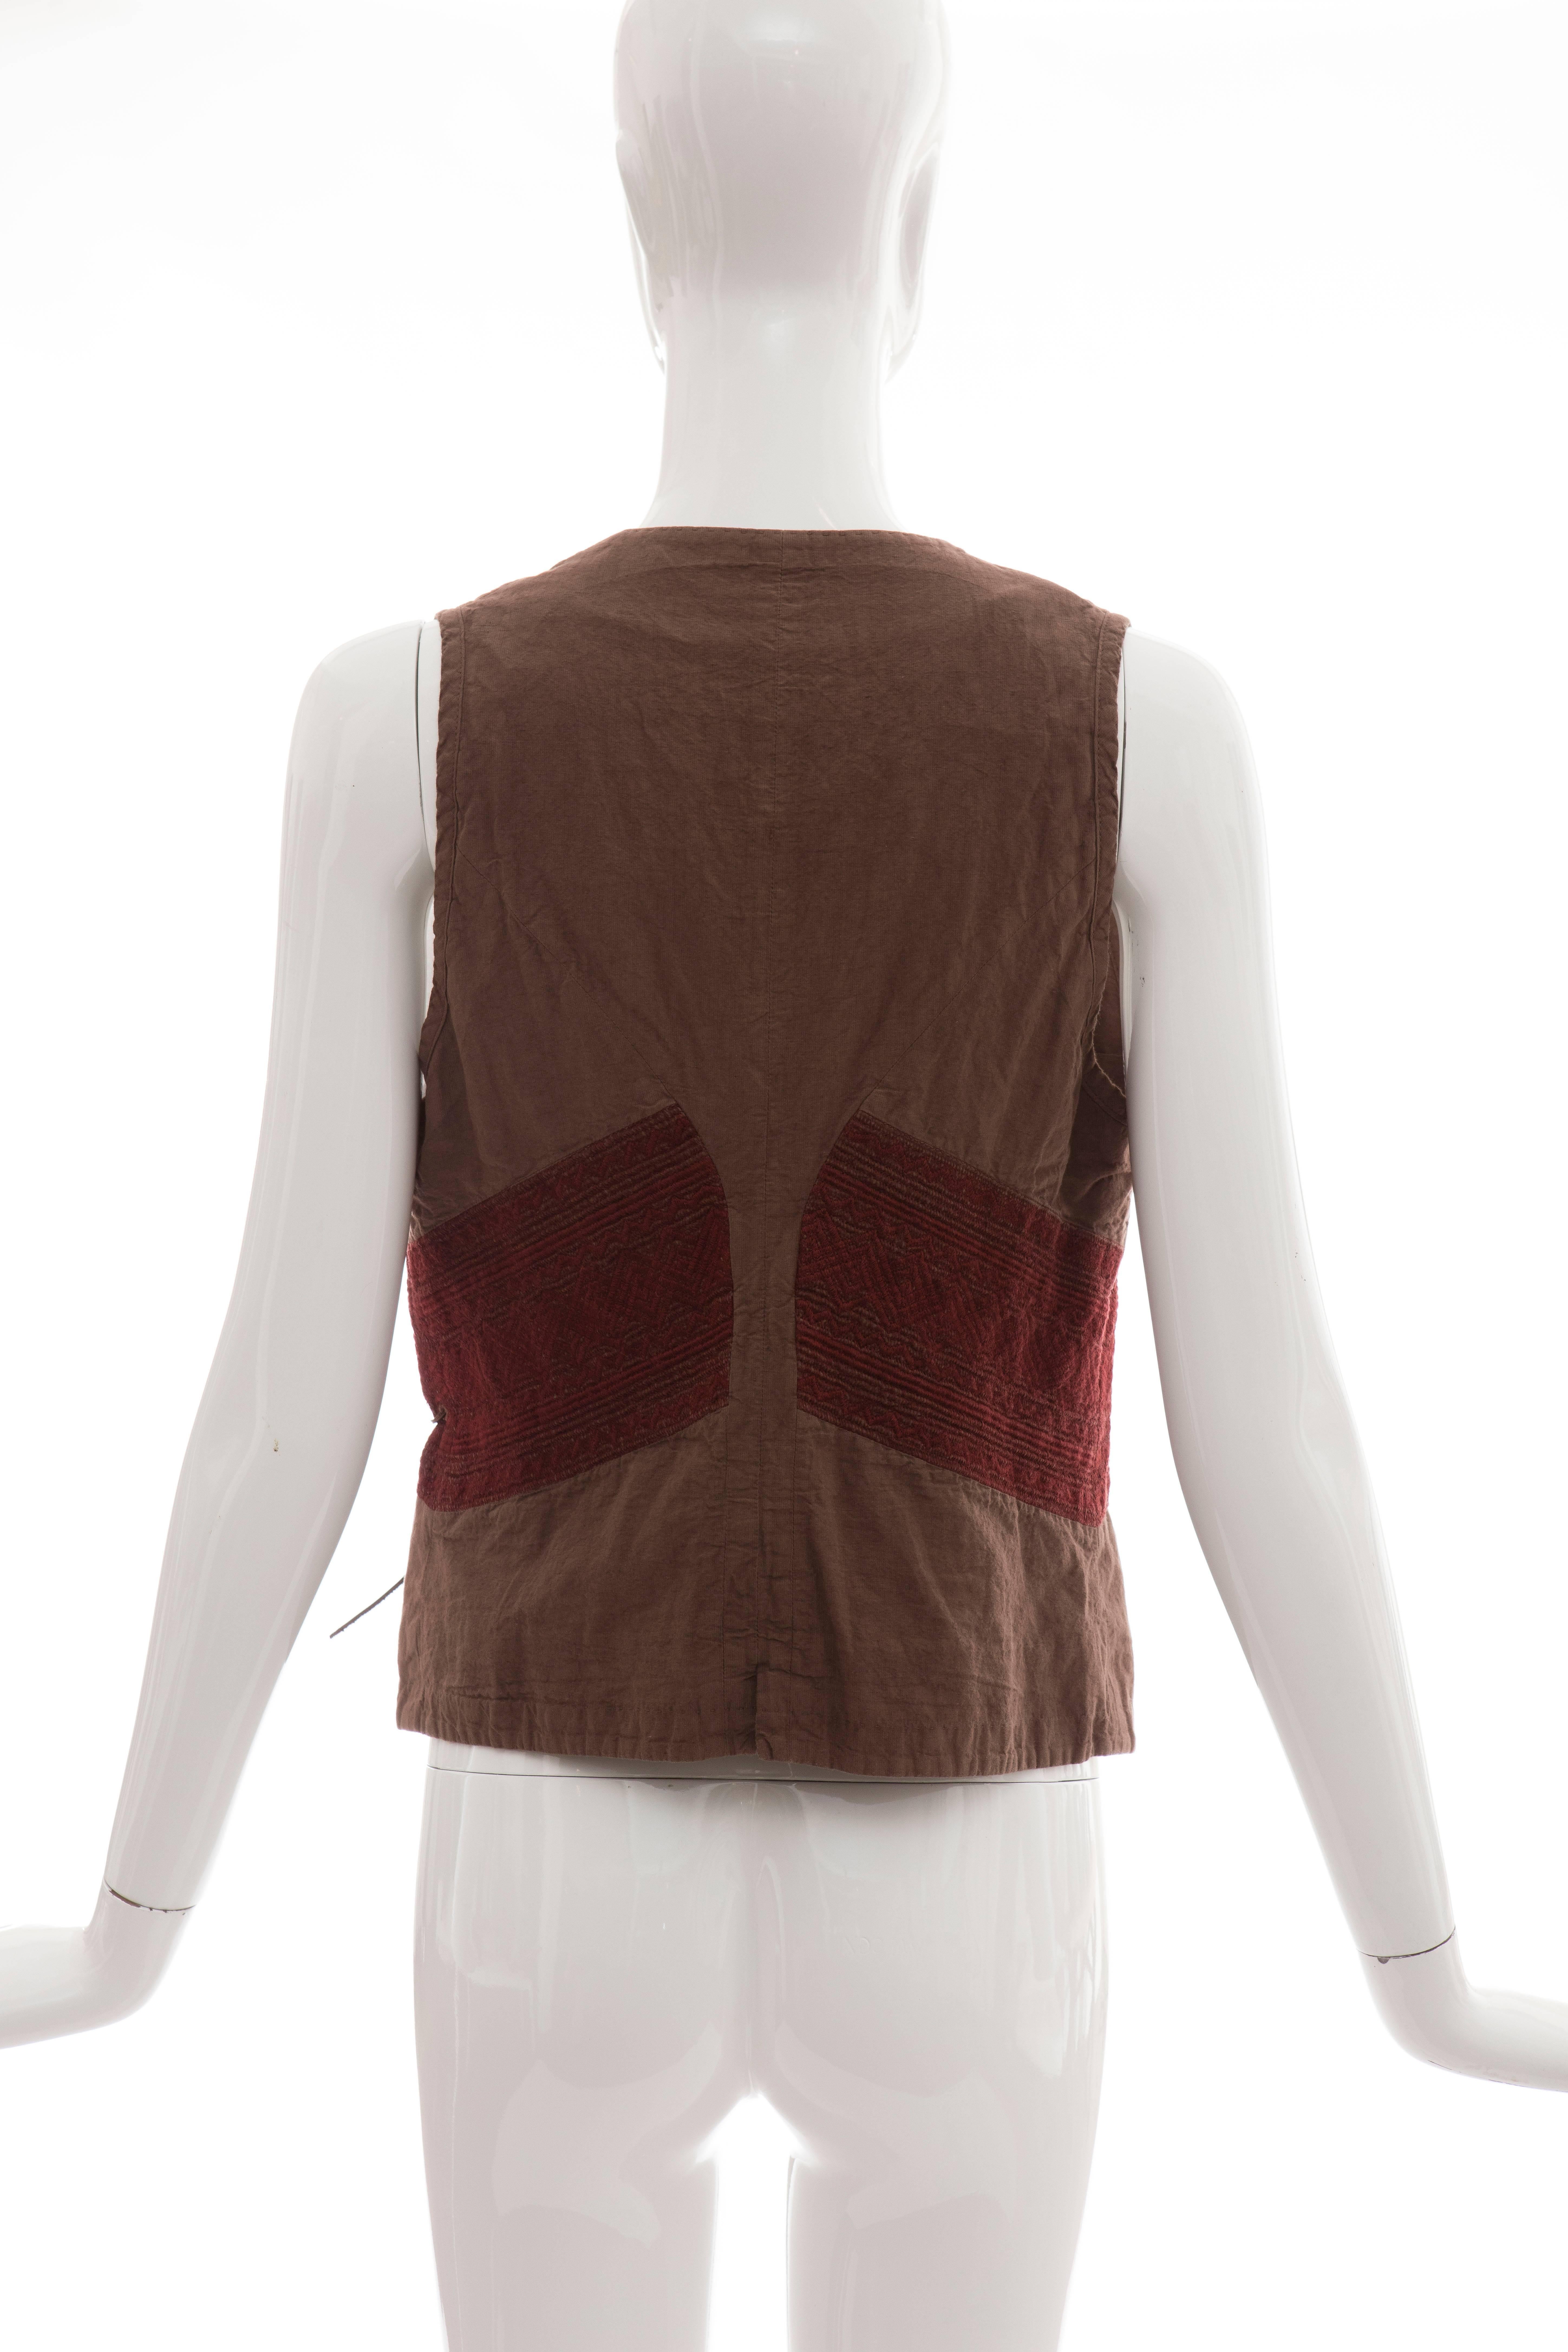 Dries Van Noten Cotton Linen Embroidered Vest, Spring/Summer 2003 In Excellent Condition For Sale In Cincinnati, OH